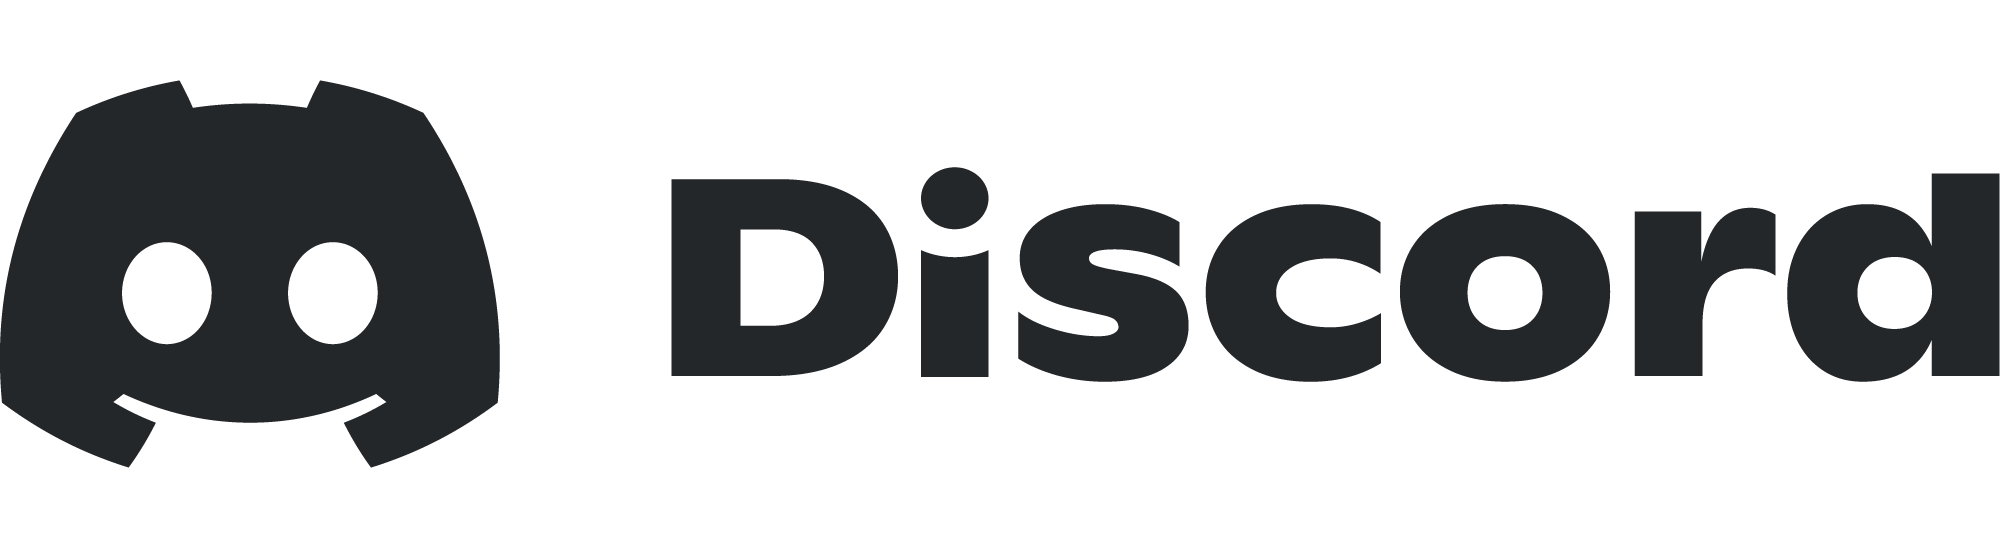 discord logo black